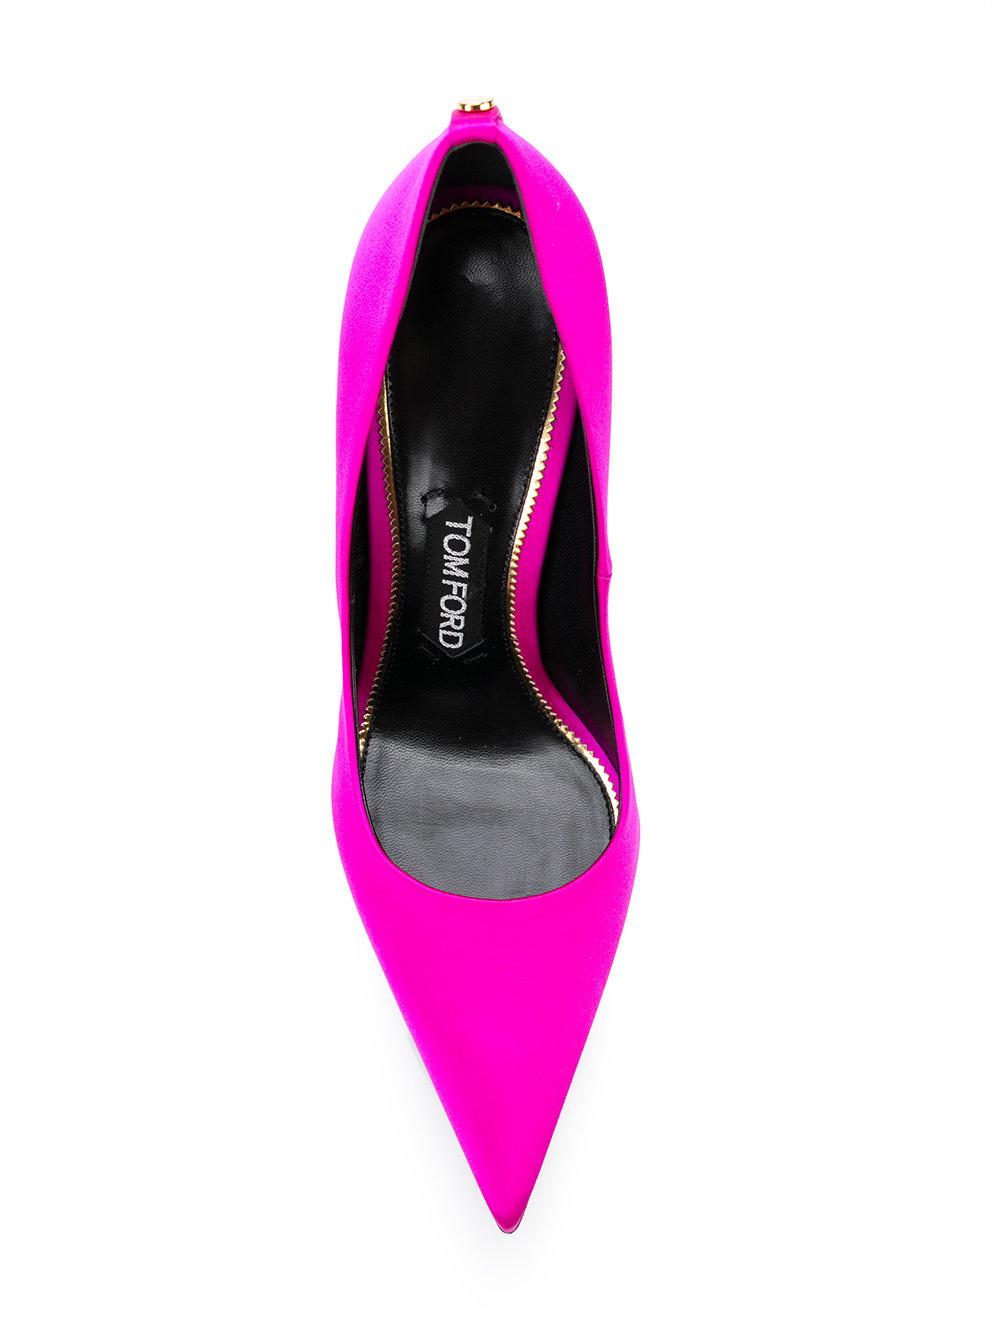 tom ford pink heels